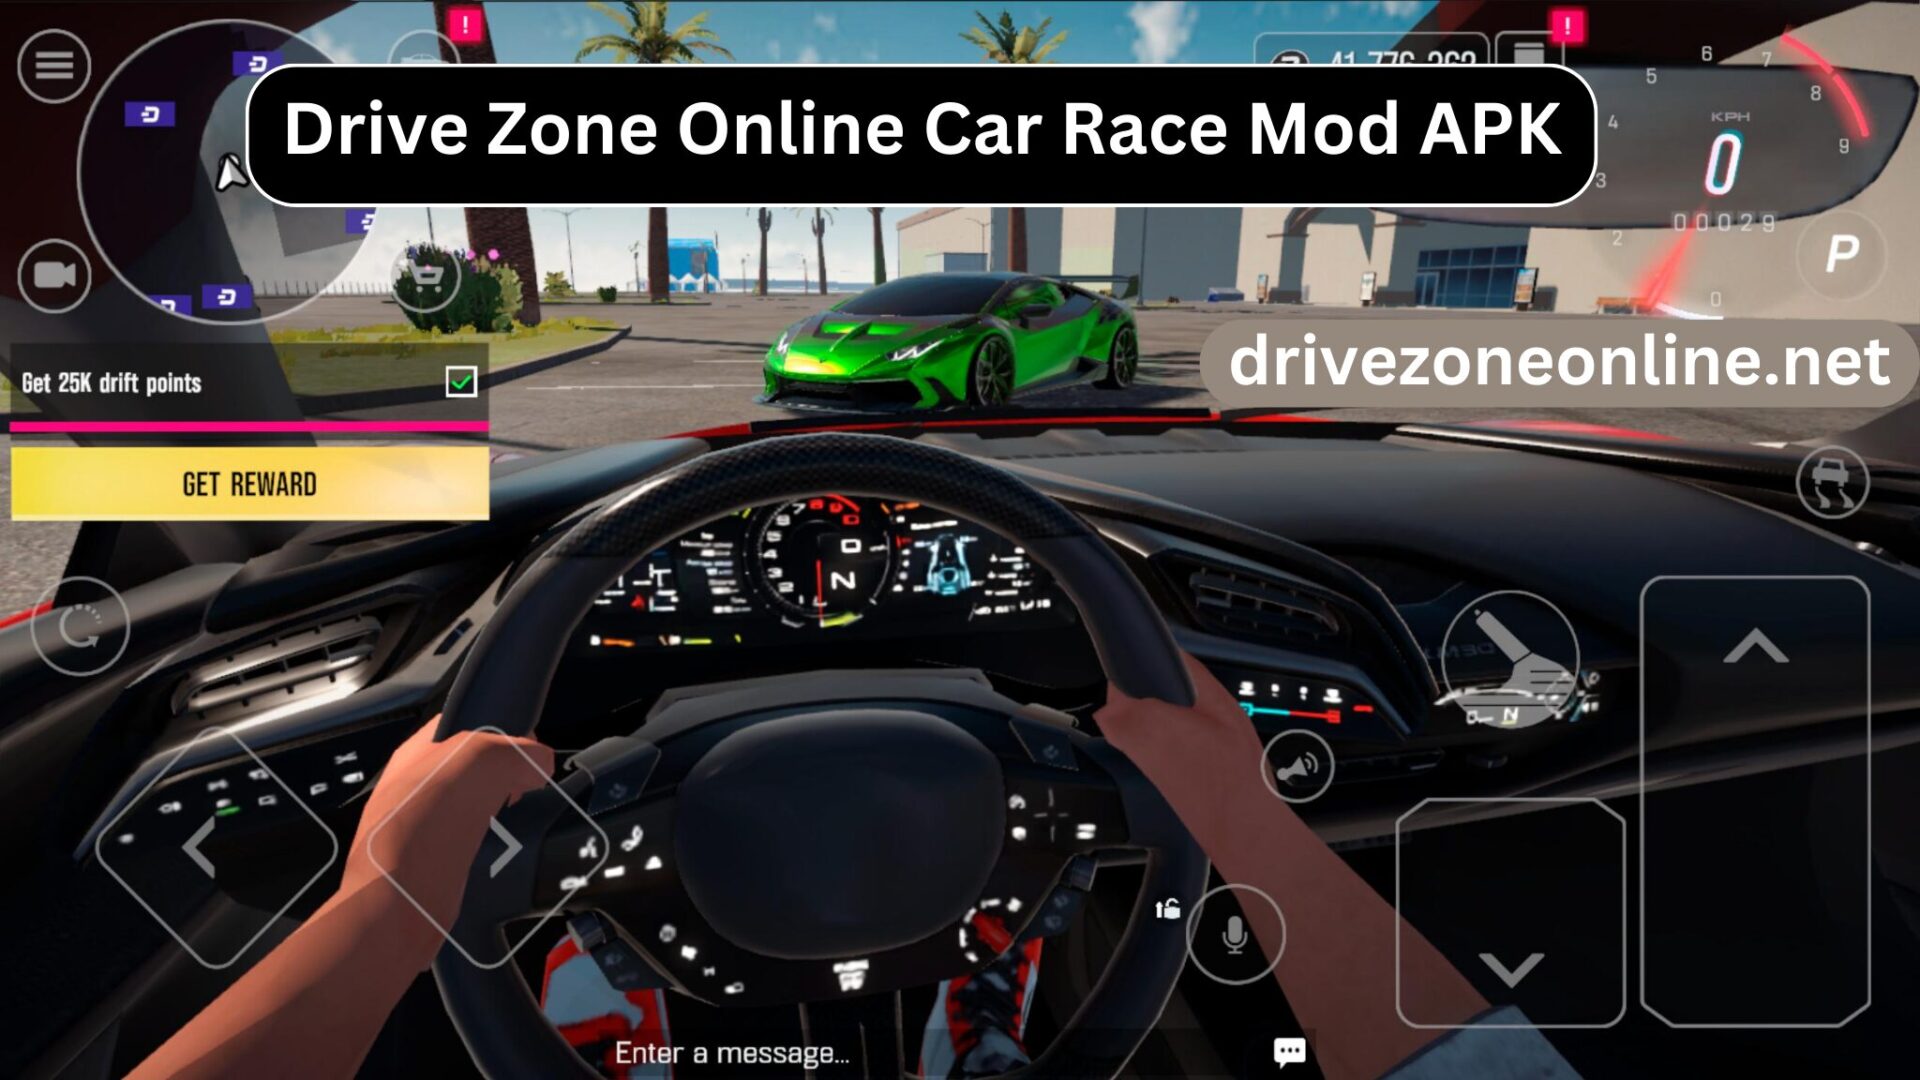 Drive Zone Online Car Race Mod APK